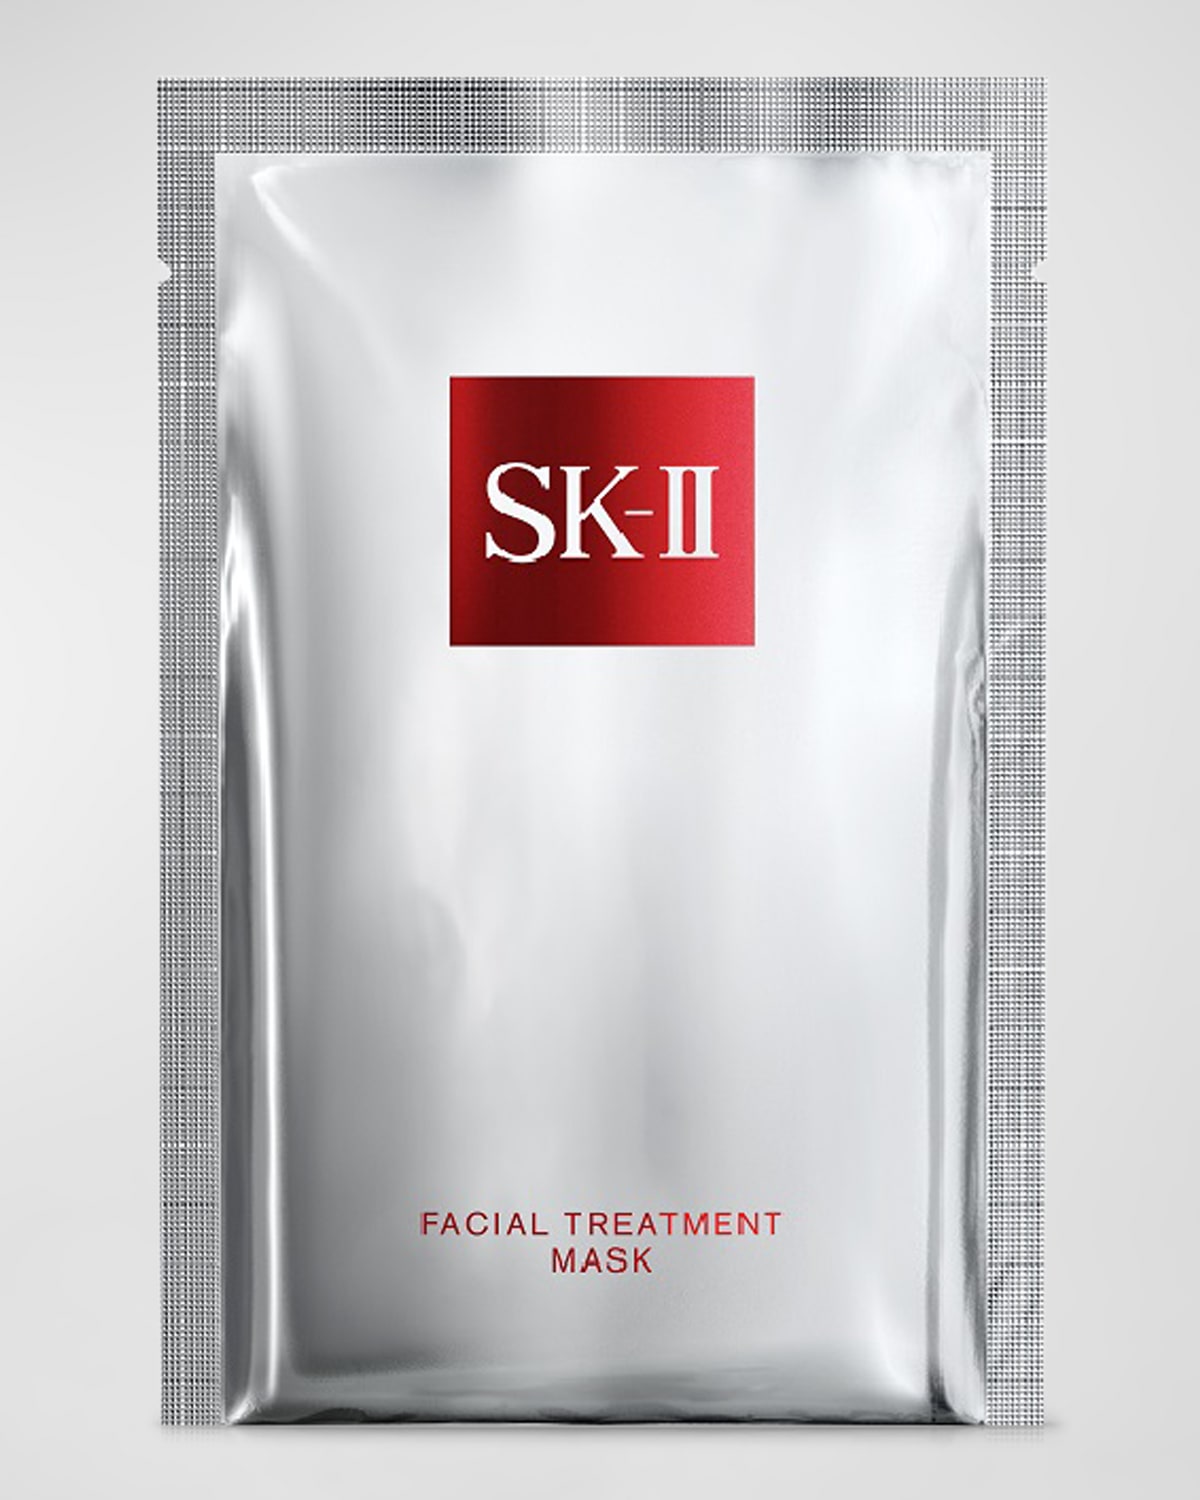 Facial Treatment Mask, 6 Sheets